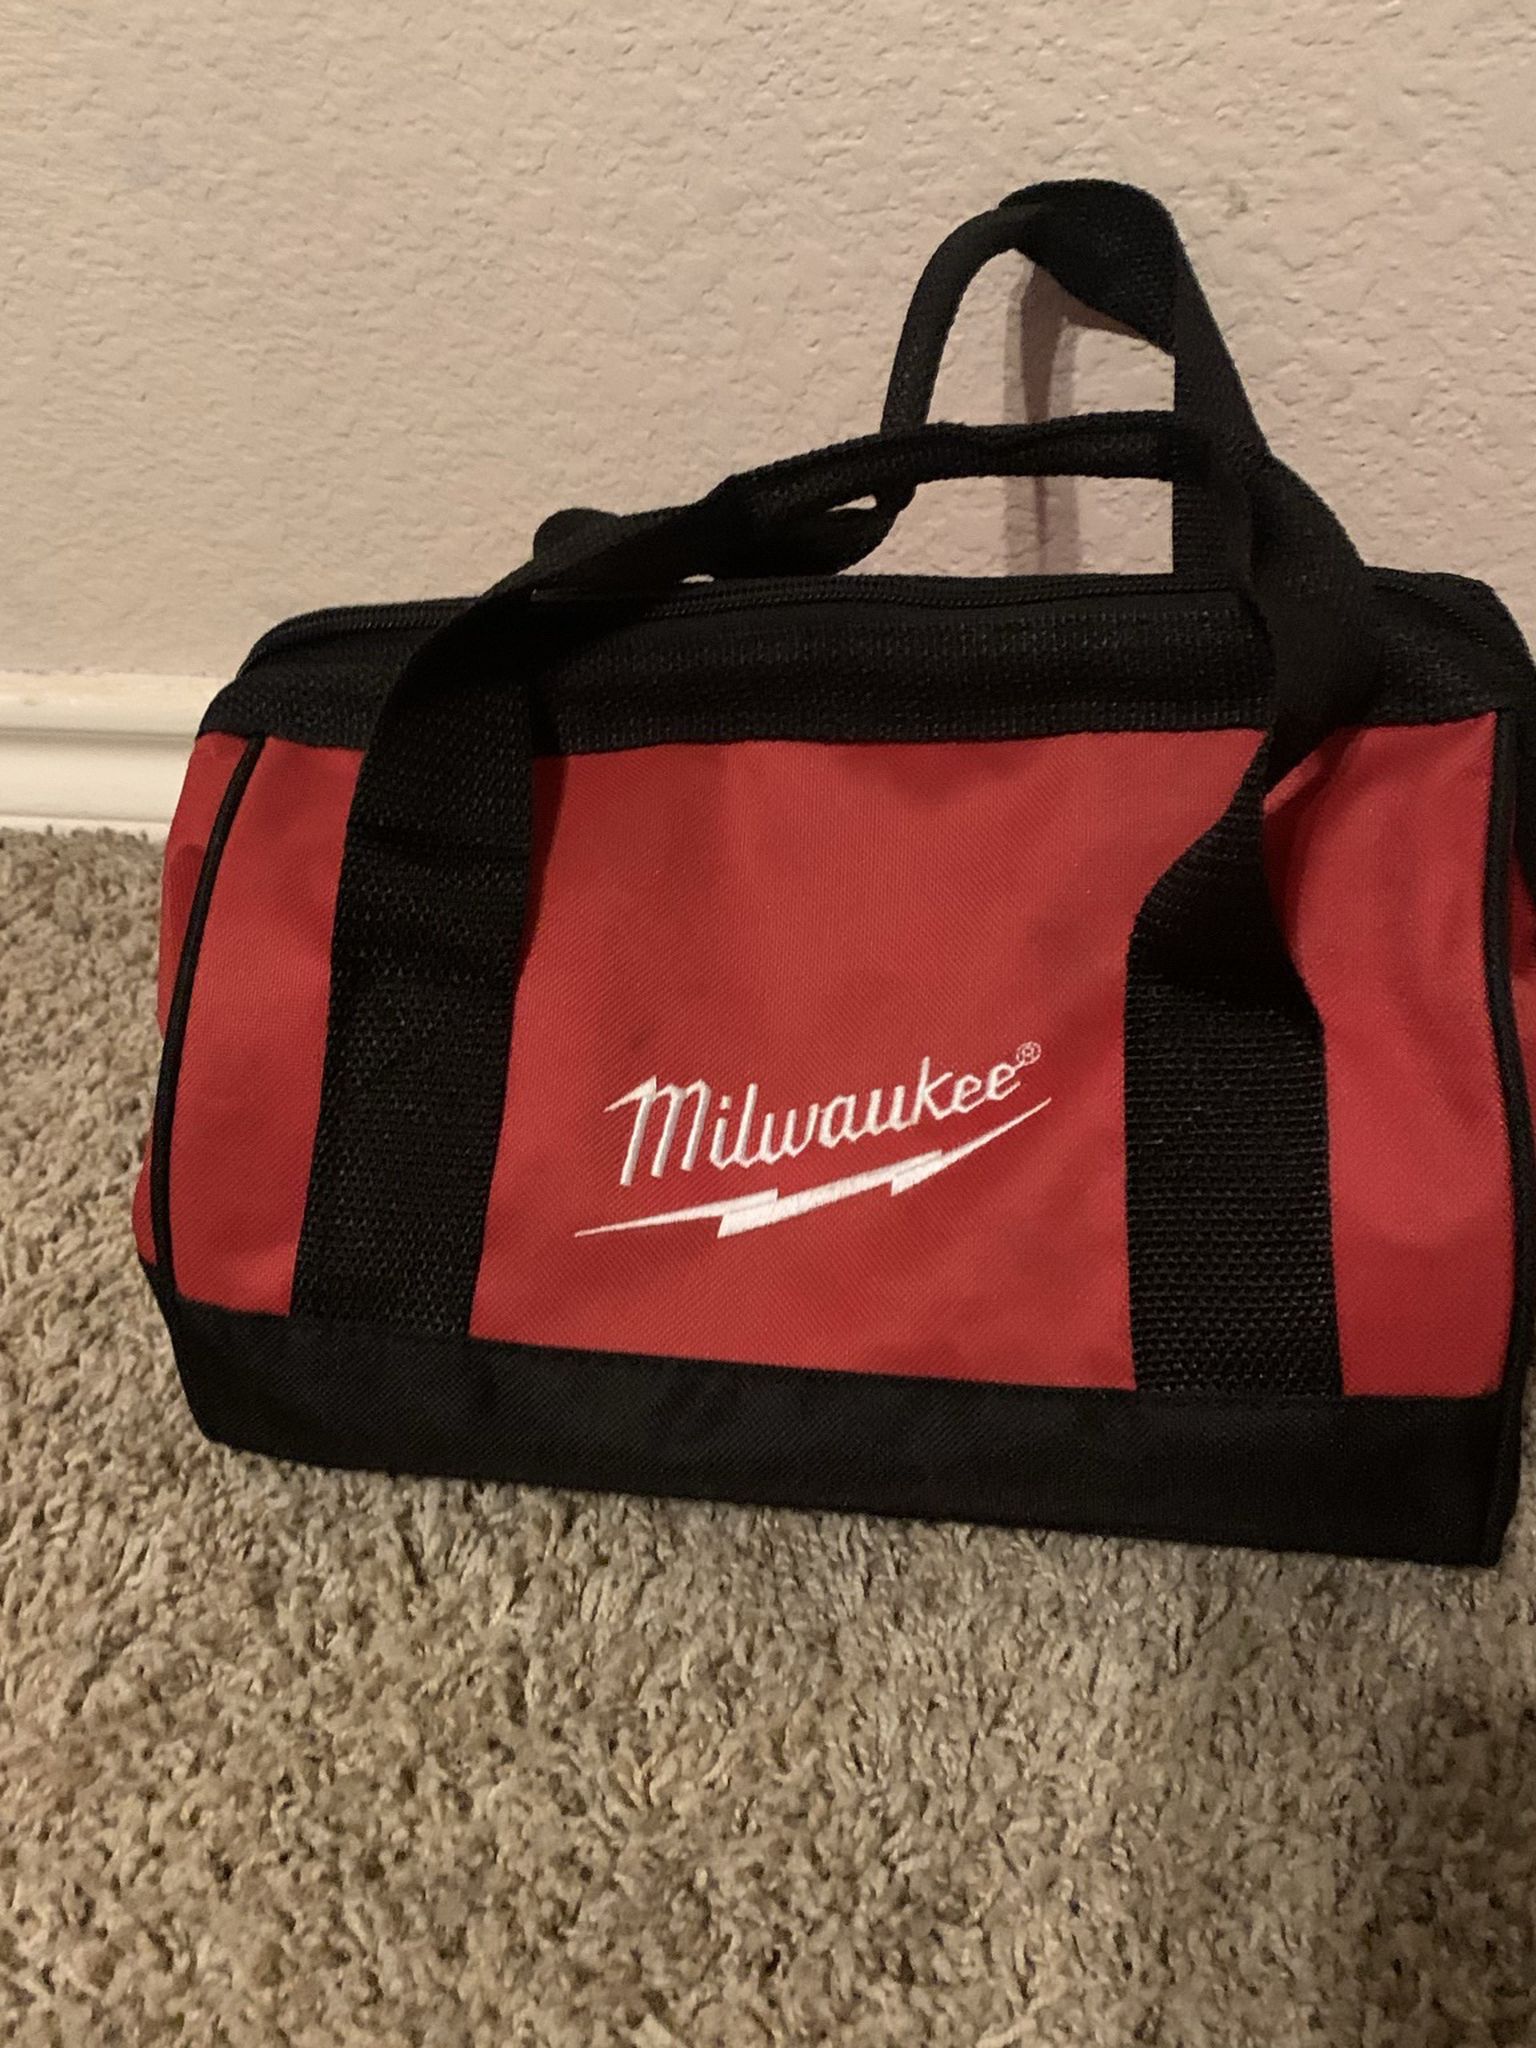 Milwaukee Tool Bag Brand New